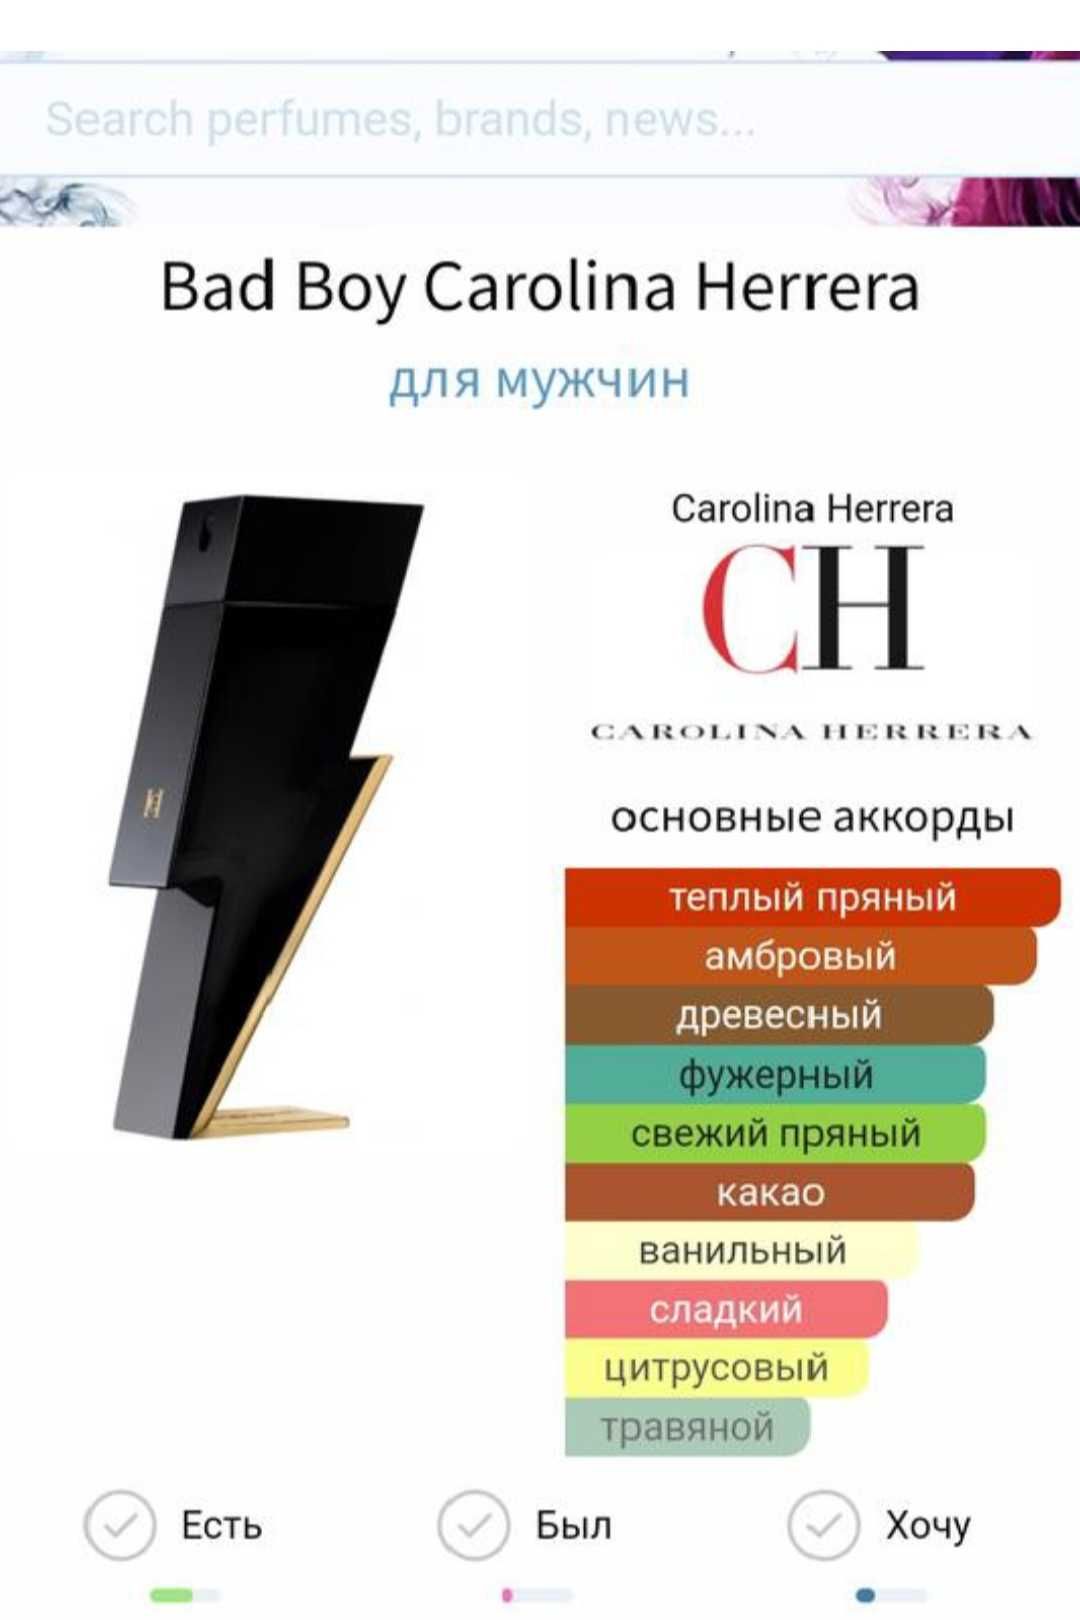 Carolina Herrera bad boy EDT 50 ml  Оригинал.